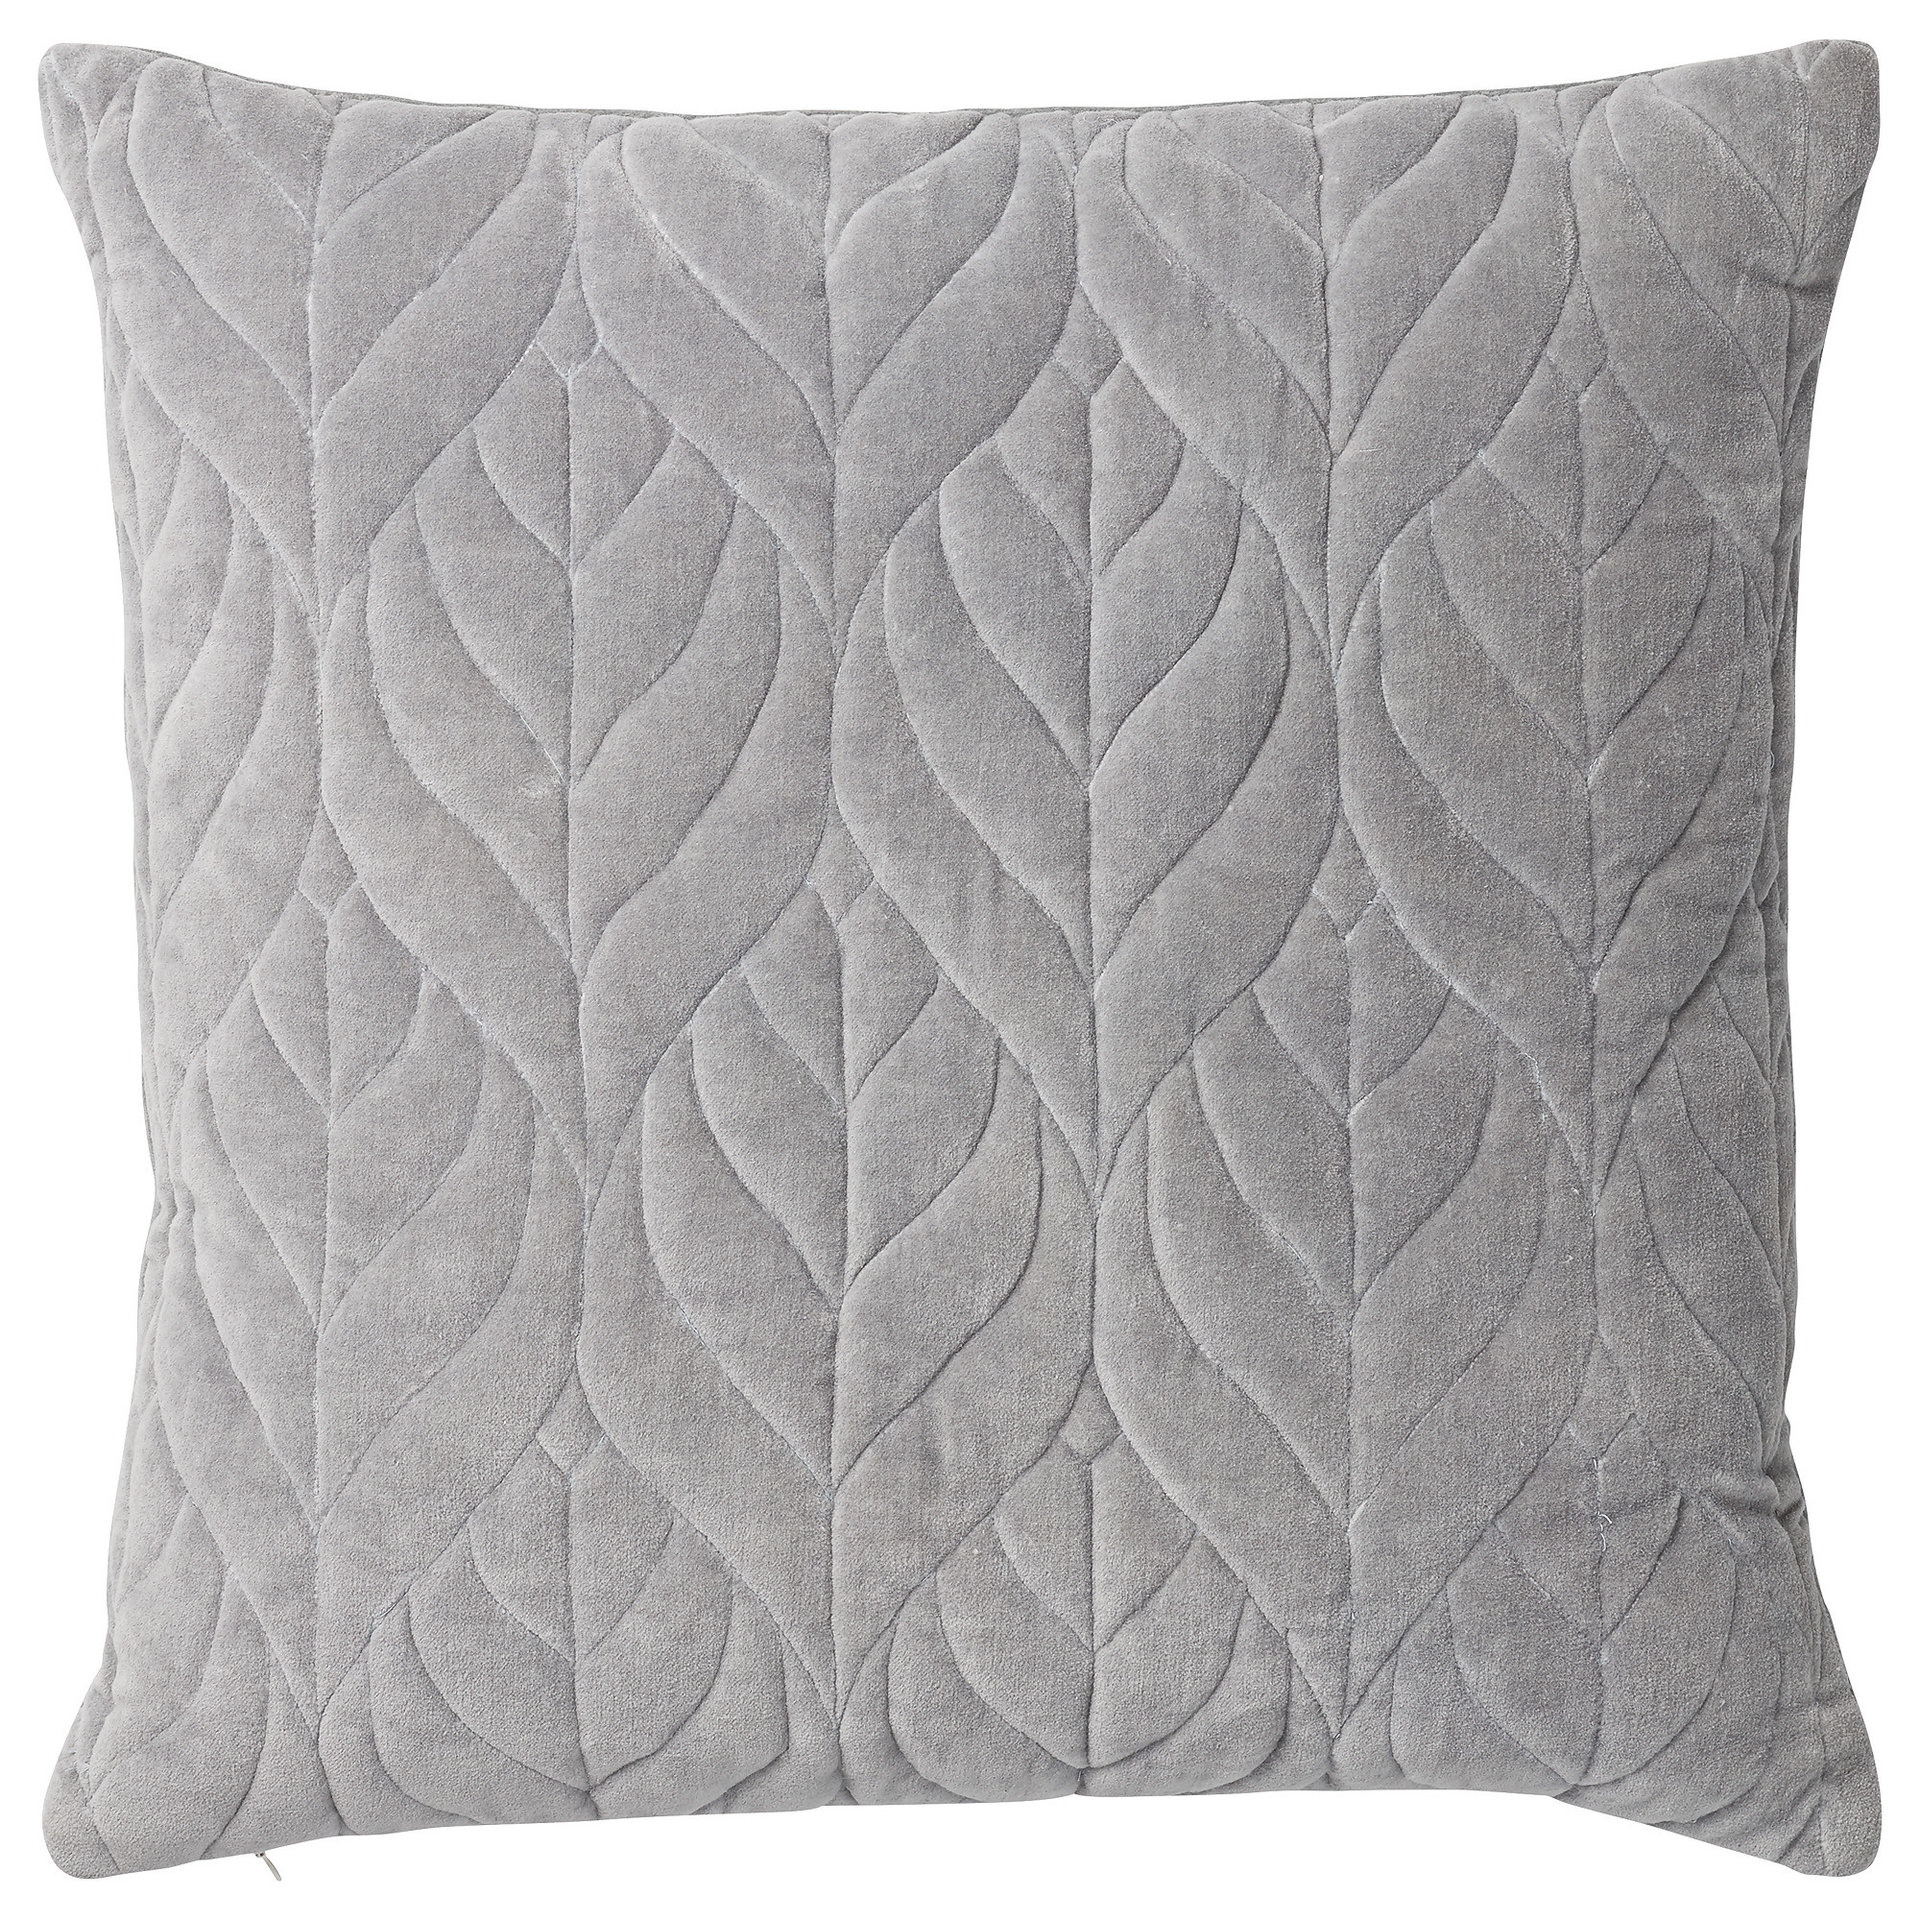 Emilia cushion 50x50 cm.